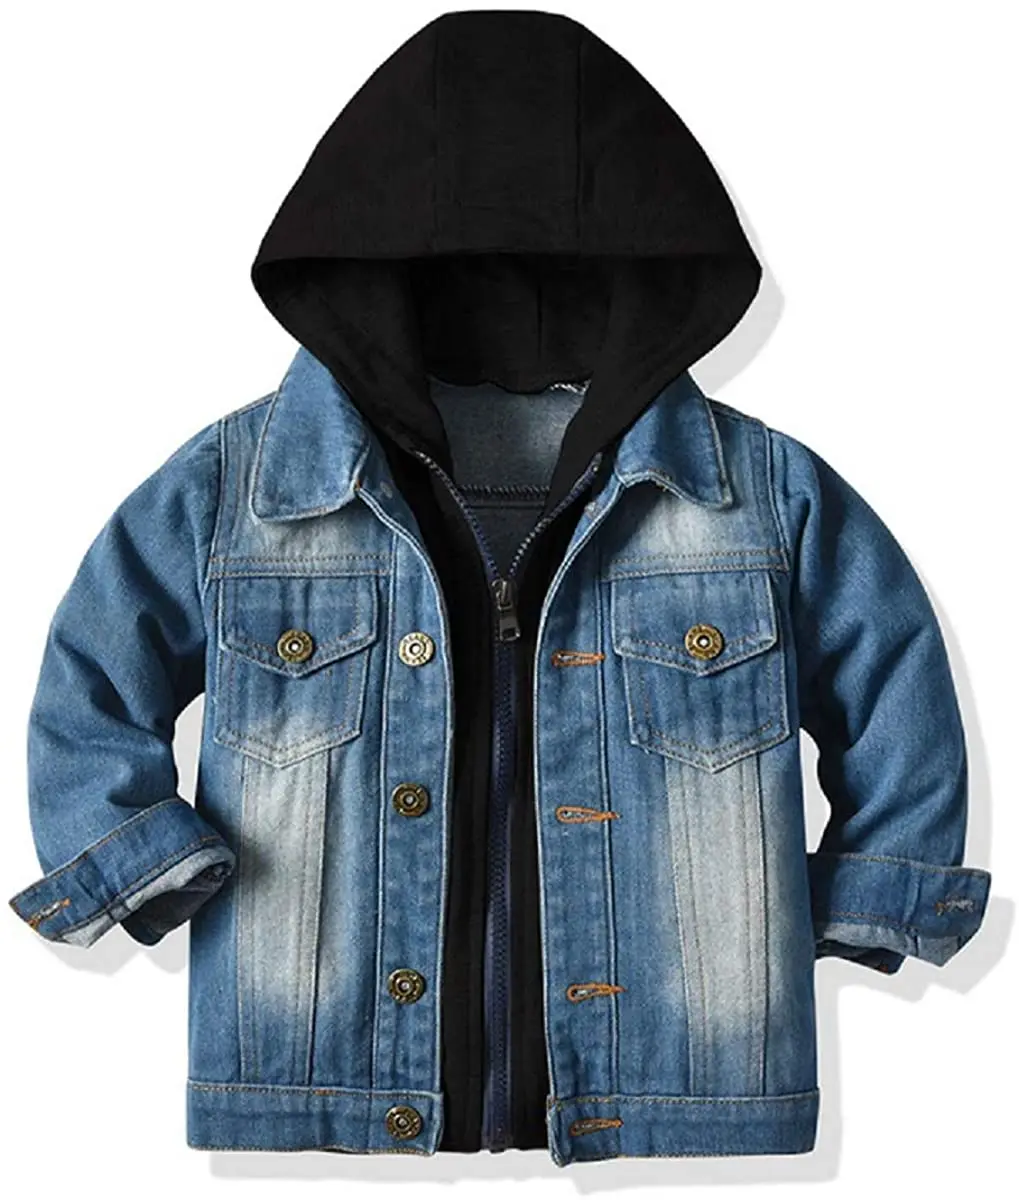 Toddler Baby Boys Girls Denim Jacket Kids Button Jeans Jacket Top Coat Outerwear 